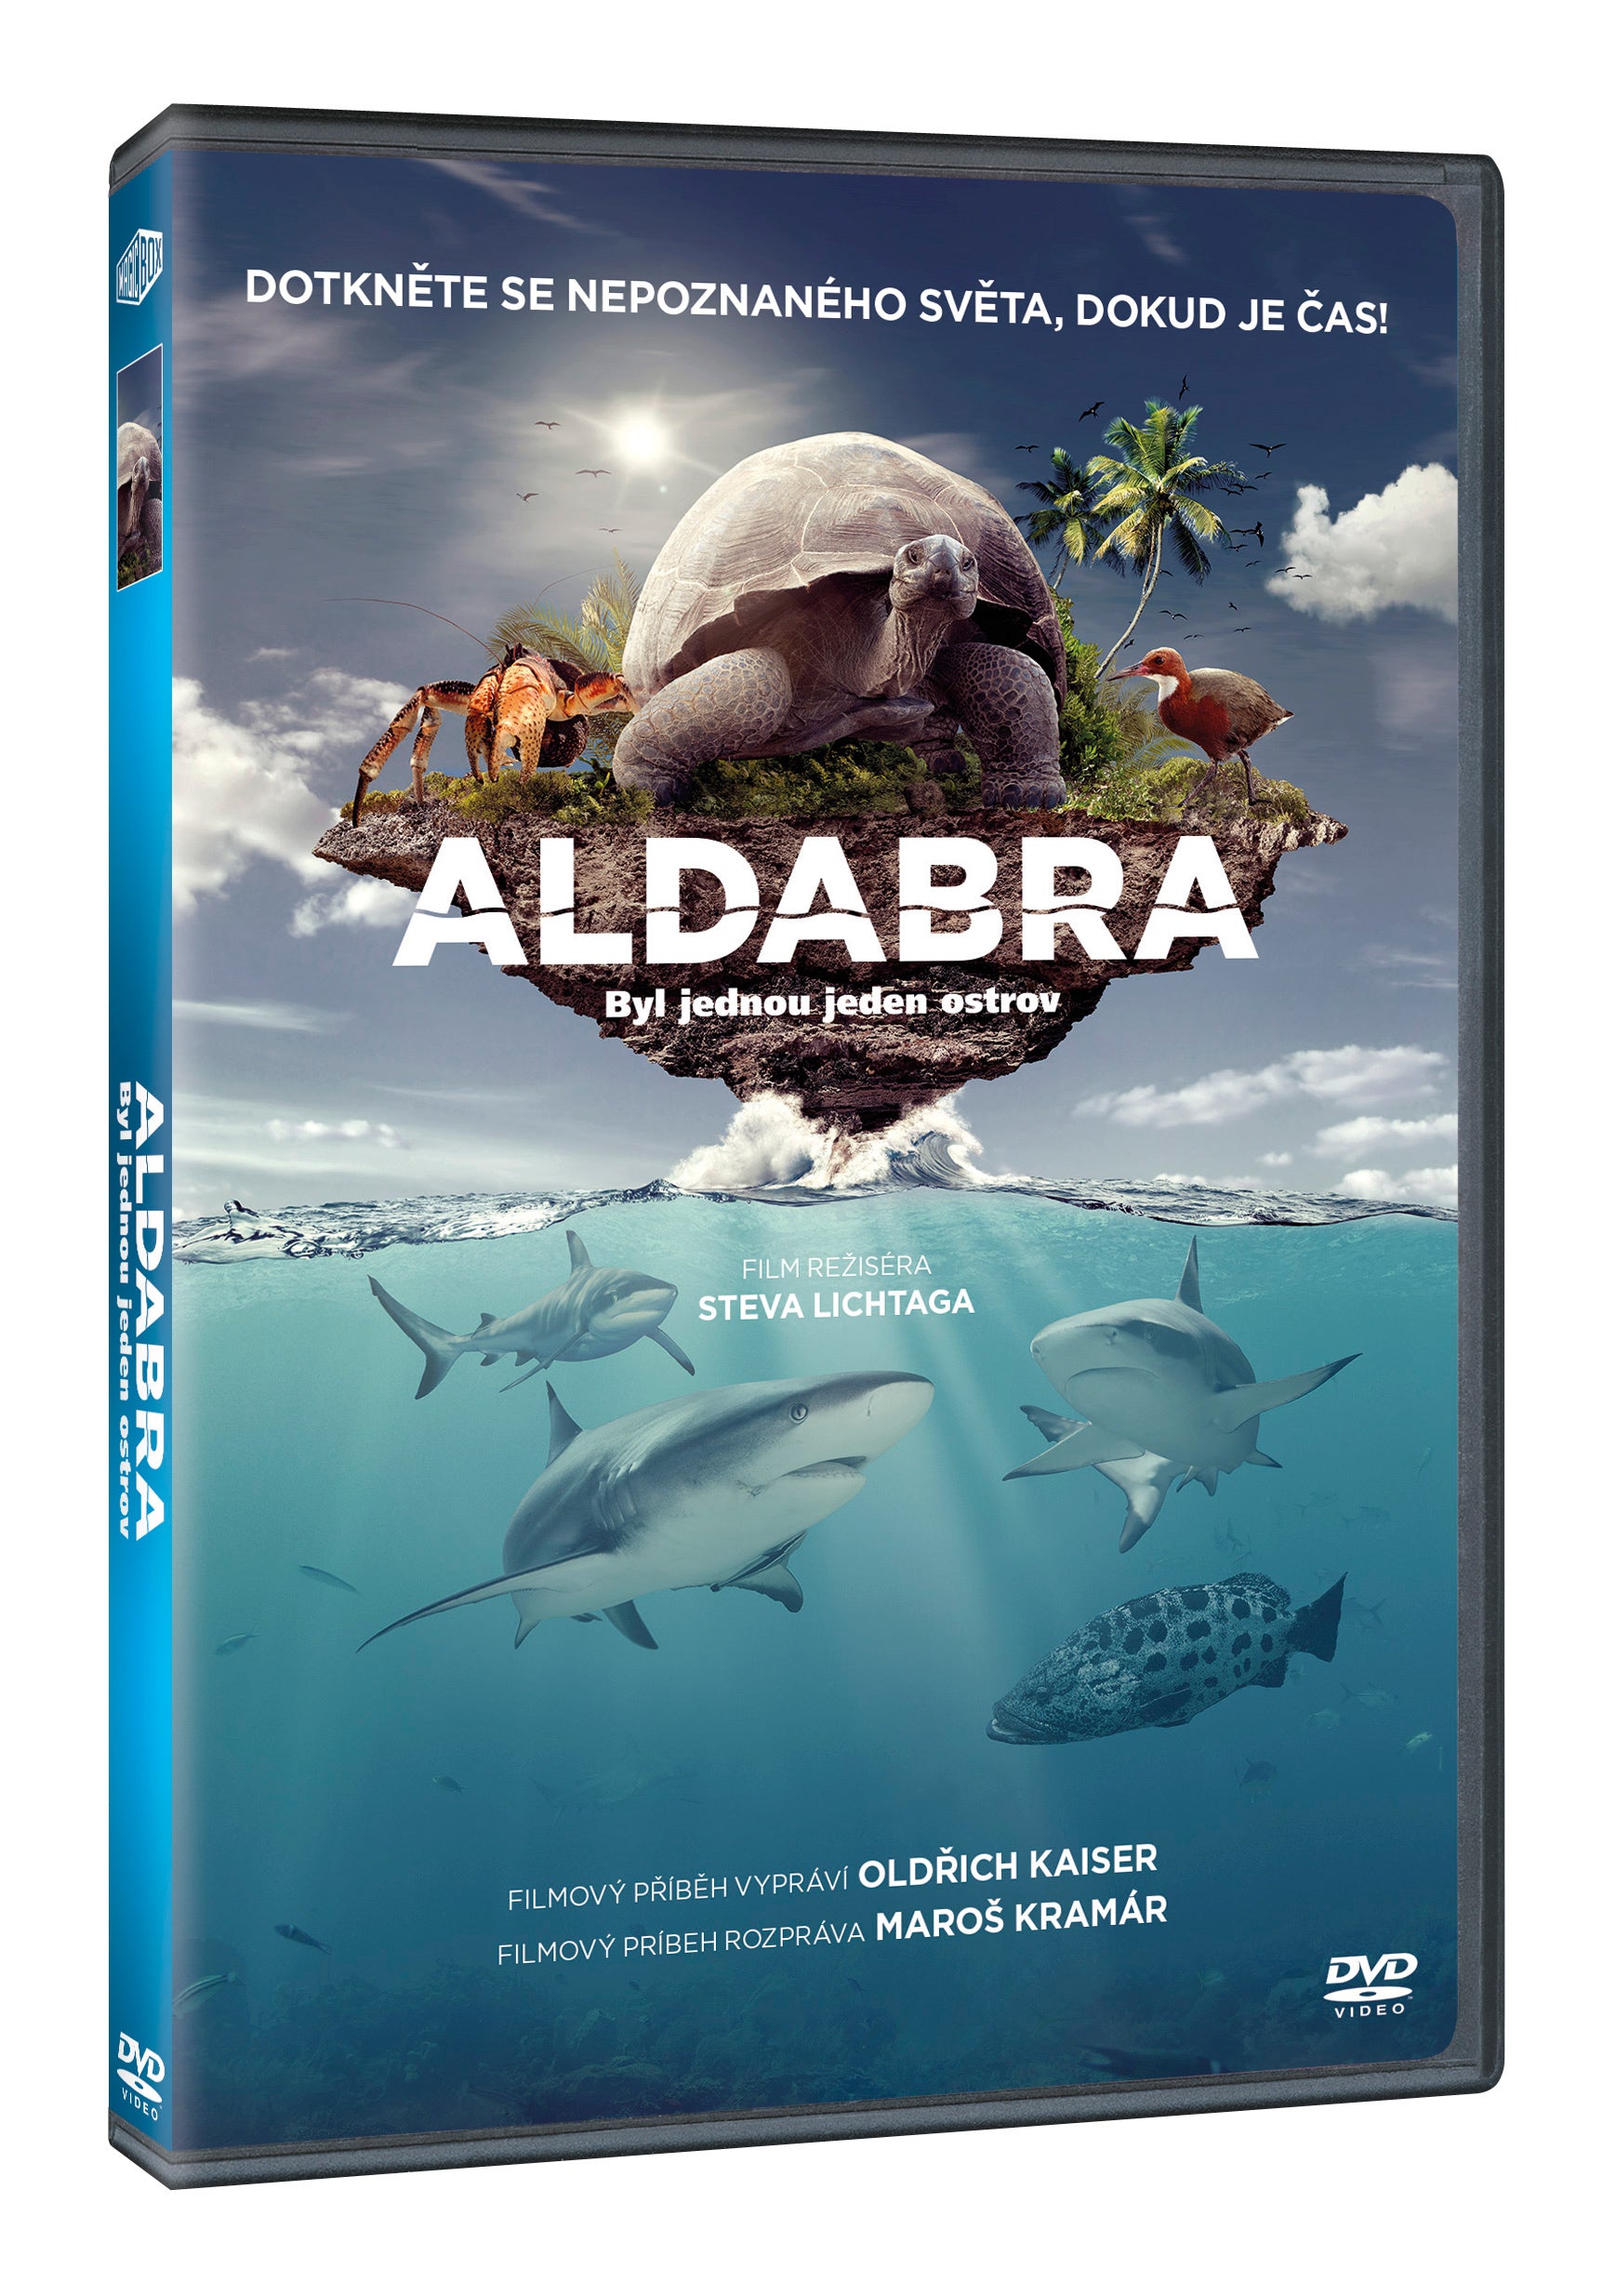 Aldabra: Once Upon an Island / Aldabra: Byl jednou jeden ostrov DVD